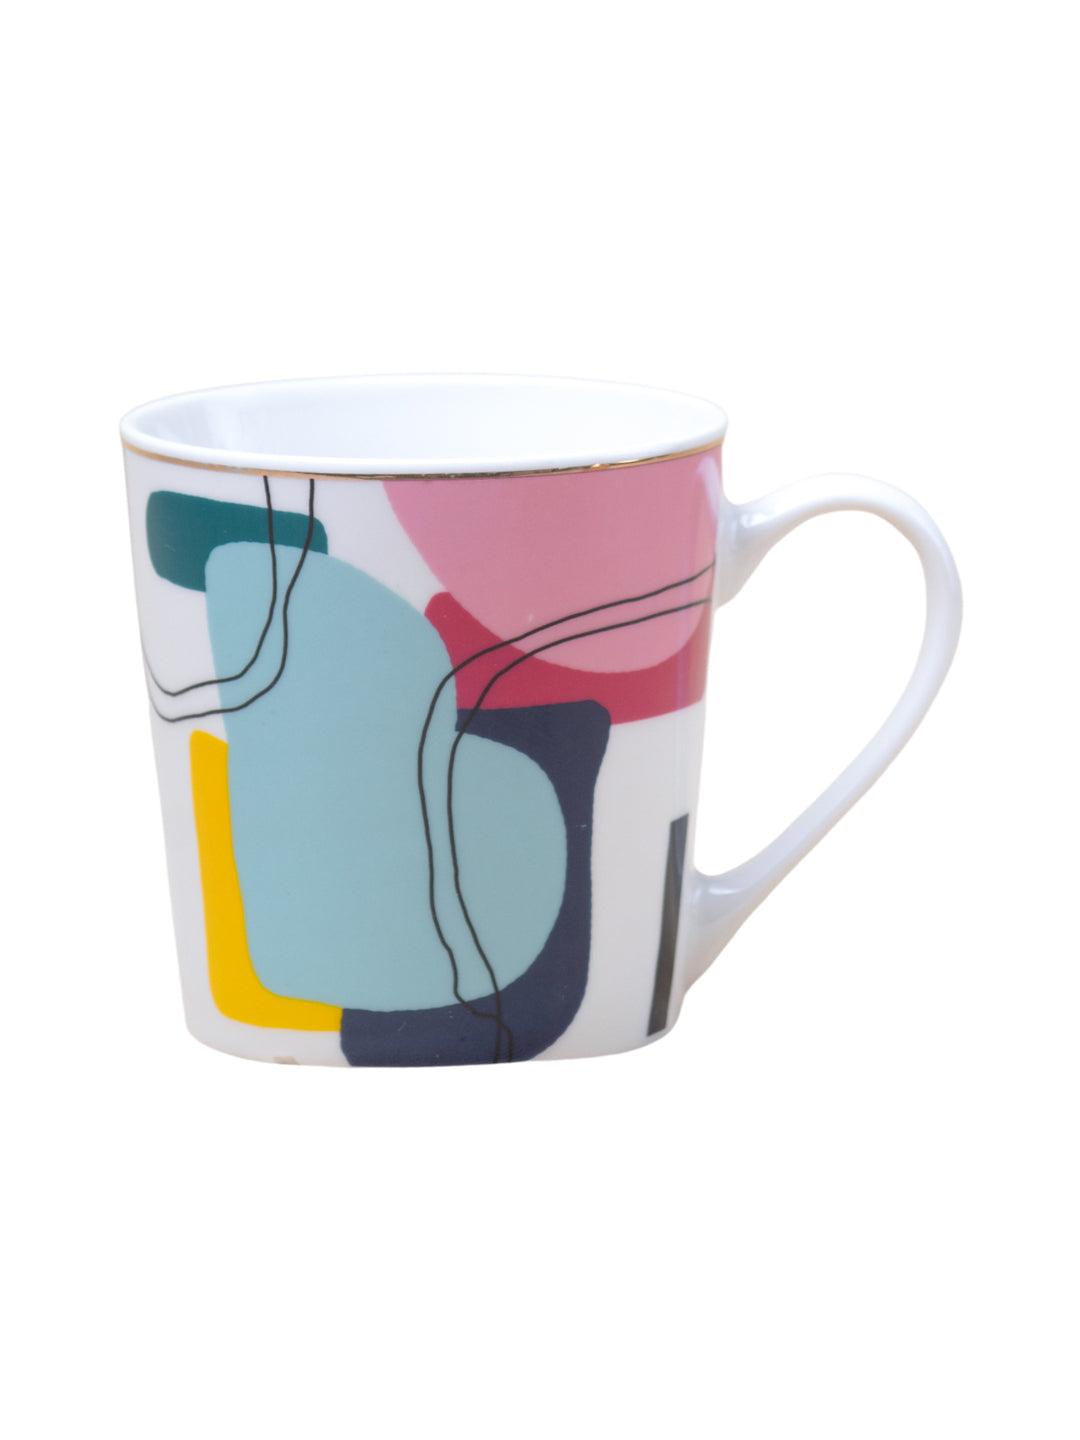 Multicolor Ceramic Coffee Mug 450 Ml - Abstract Cups & Mugs - 2